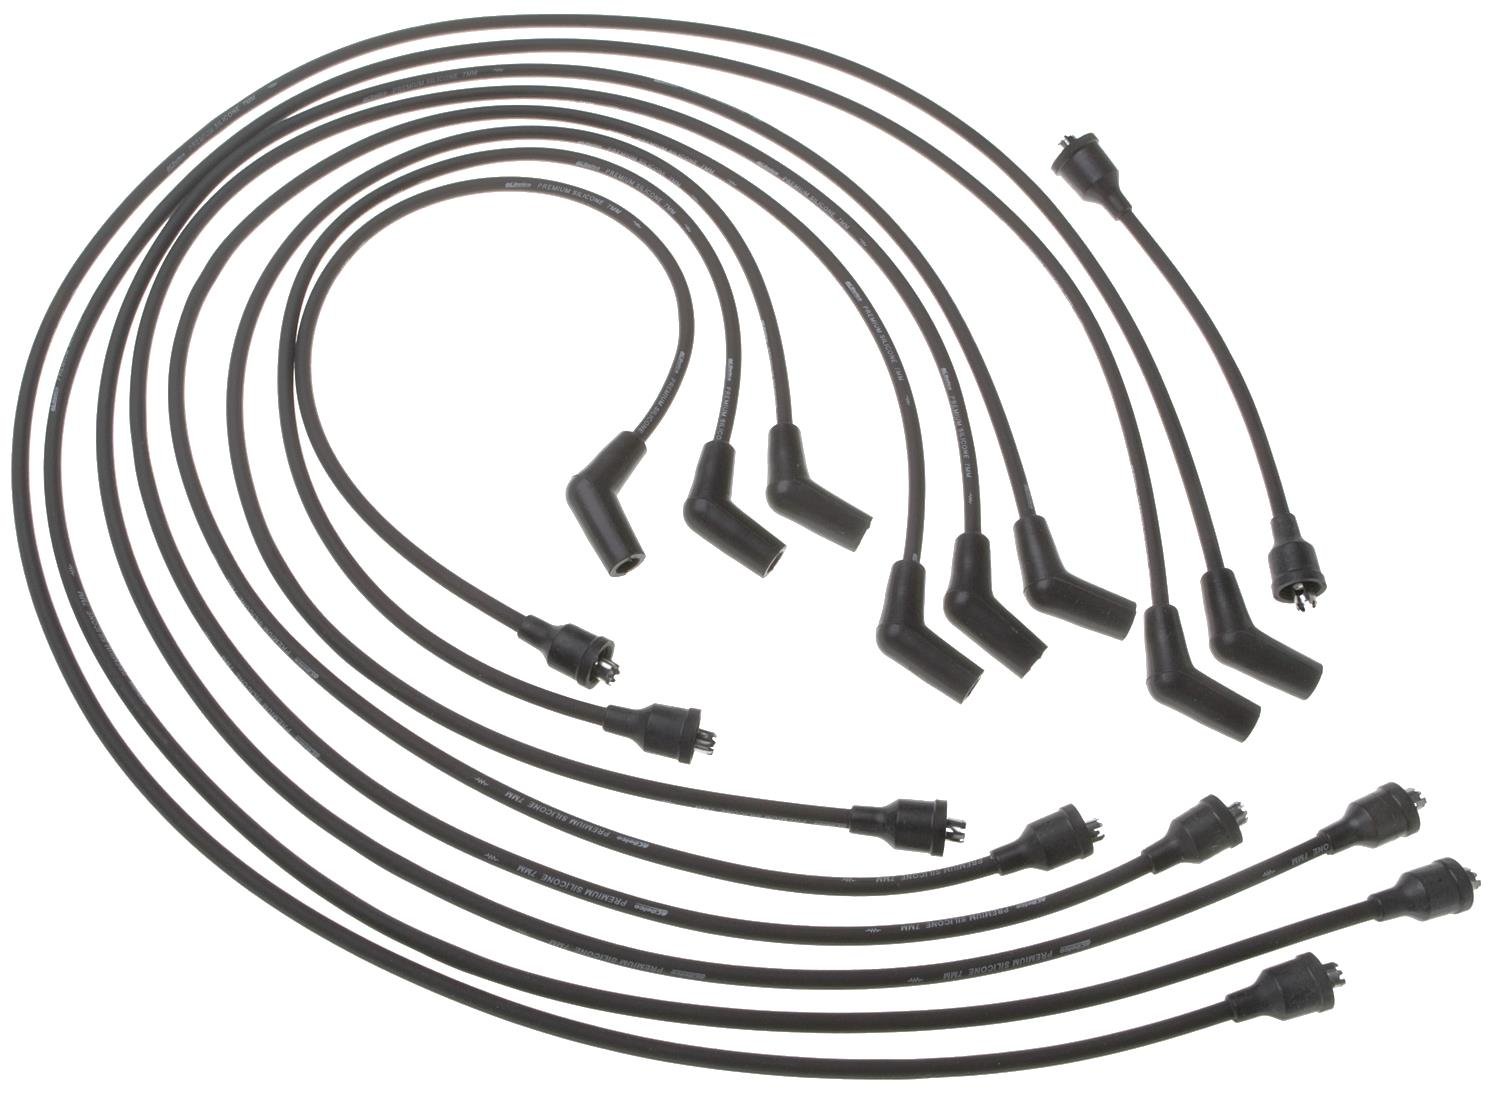 ACDelco 9188E Professional Spark Plug Wire Set.